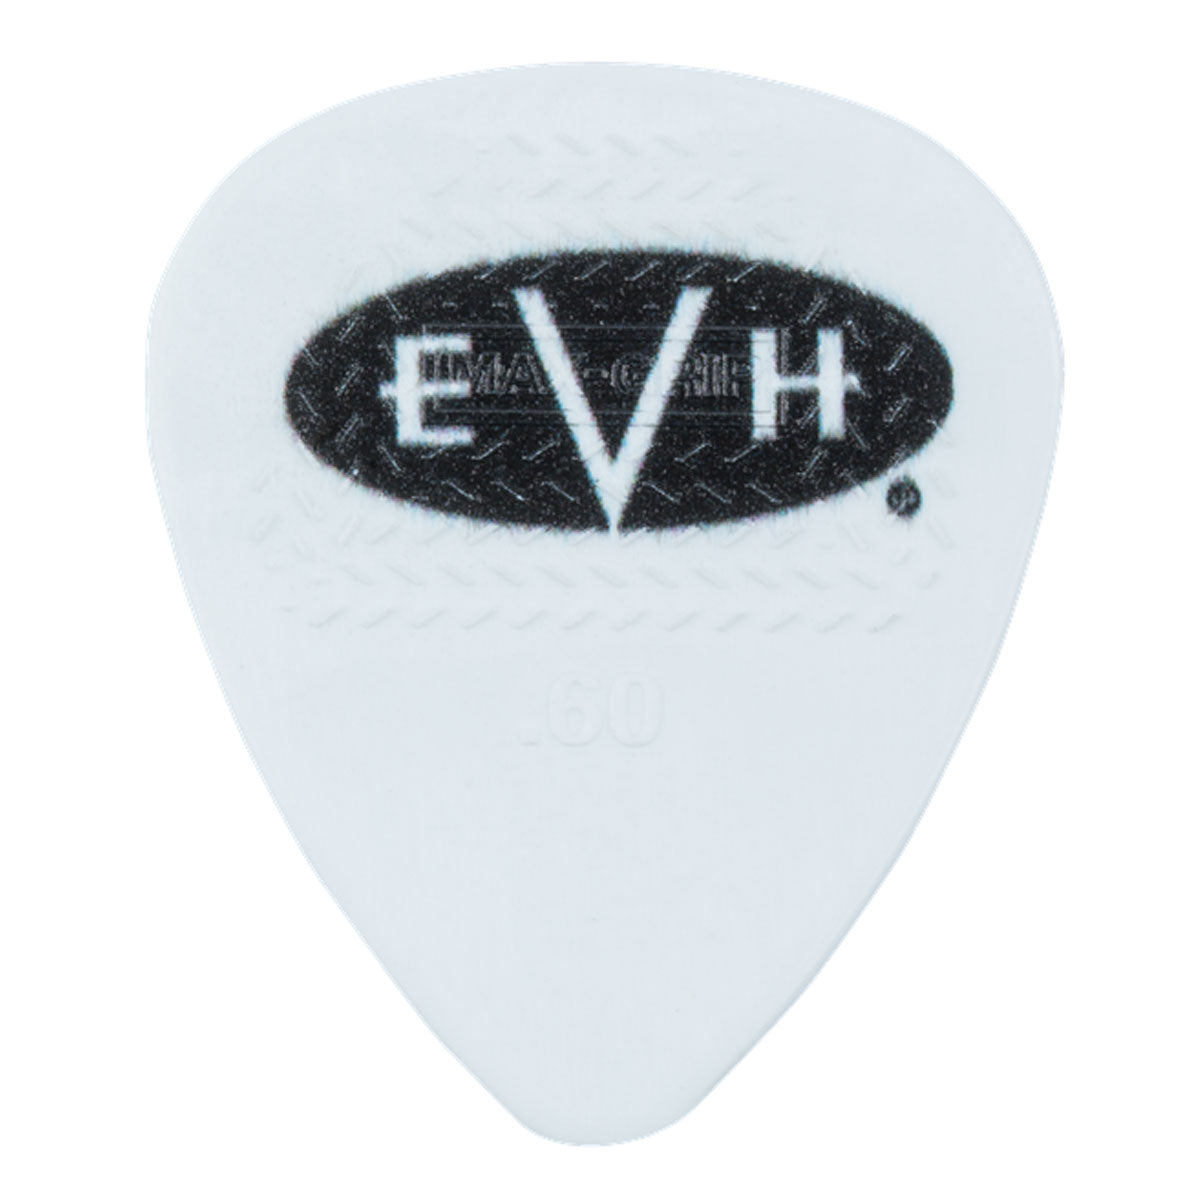 EVH Signature Picks, White/Black, 1.00mm, (6 Pack) - 0221351805